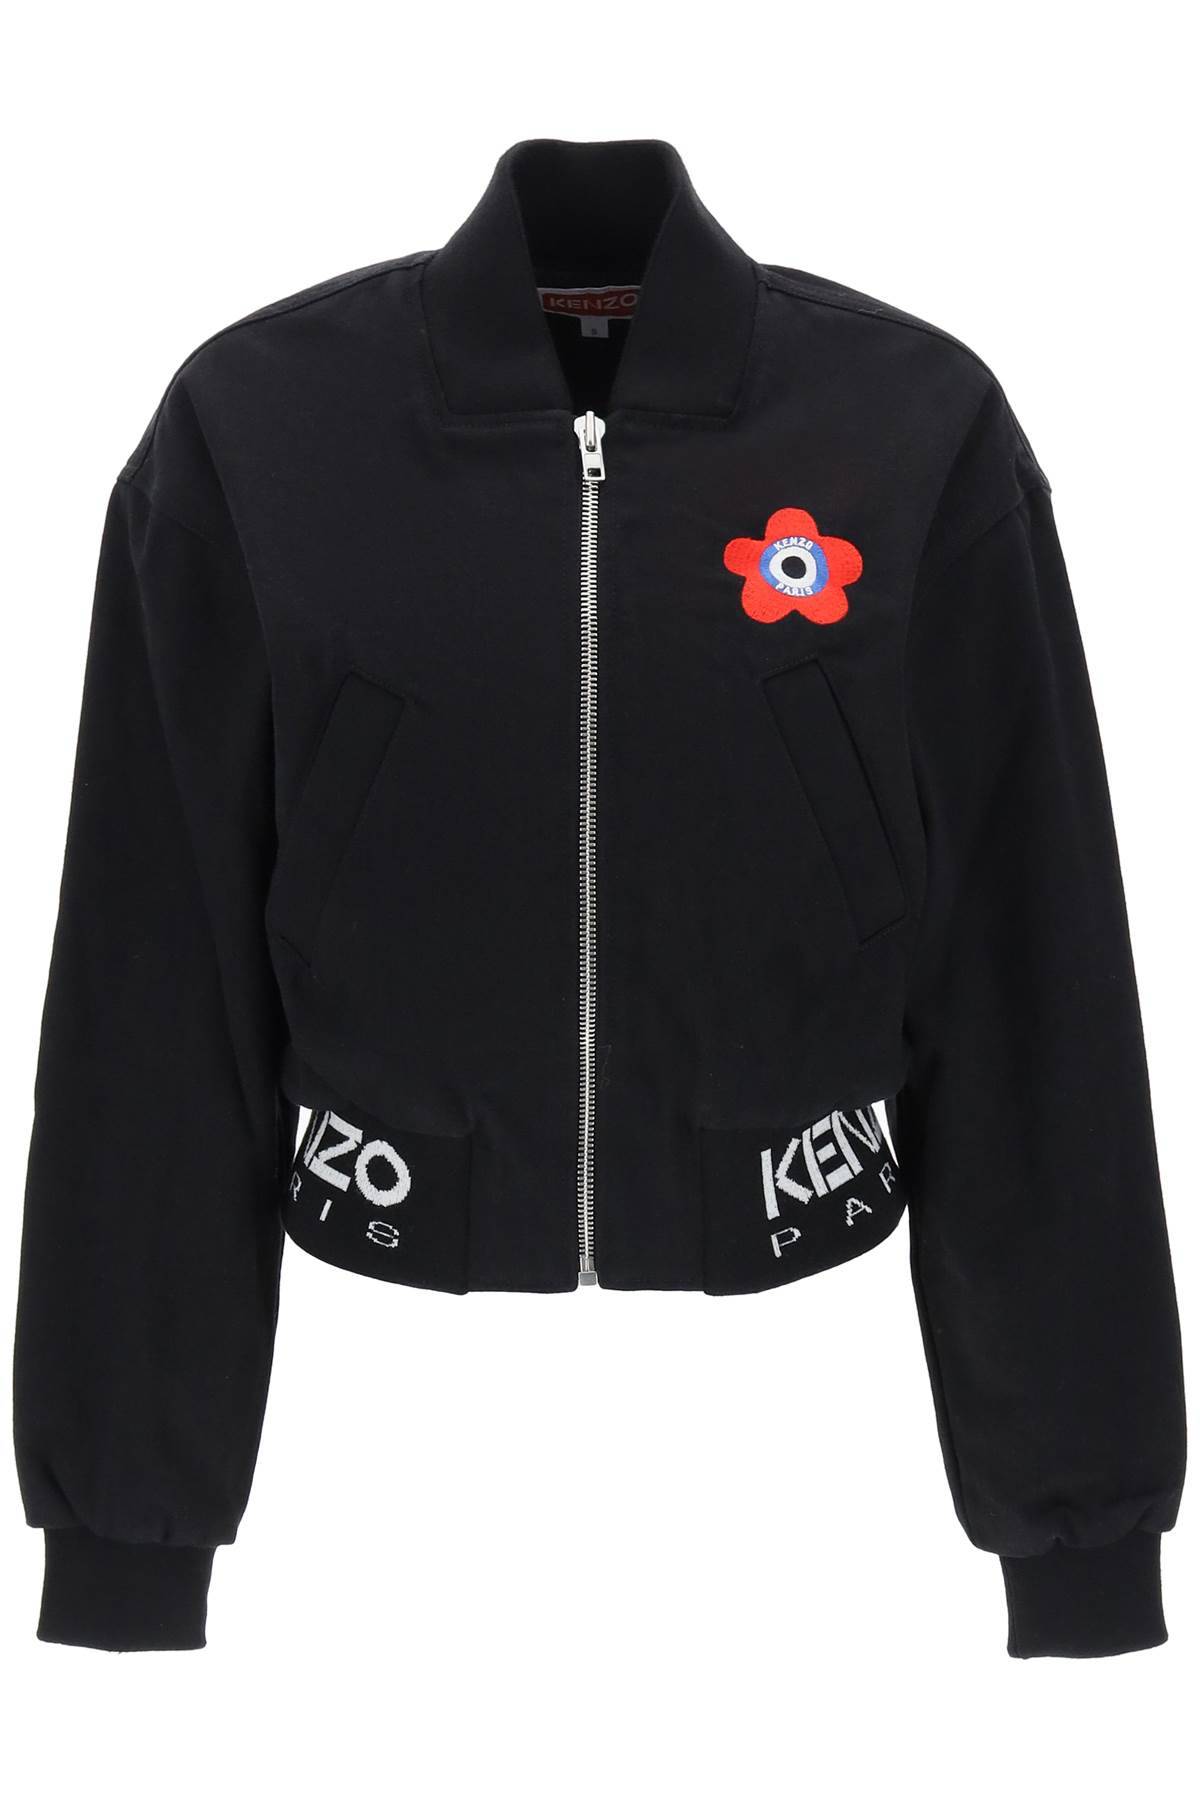 Kenzo KENZO target cropped bomber jacket in denim